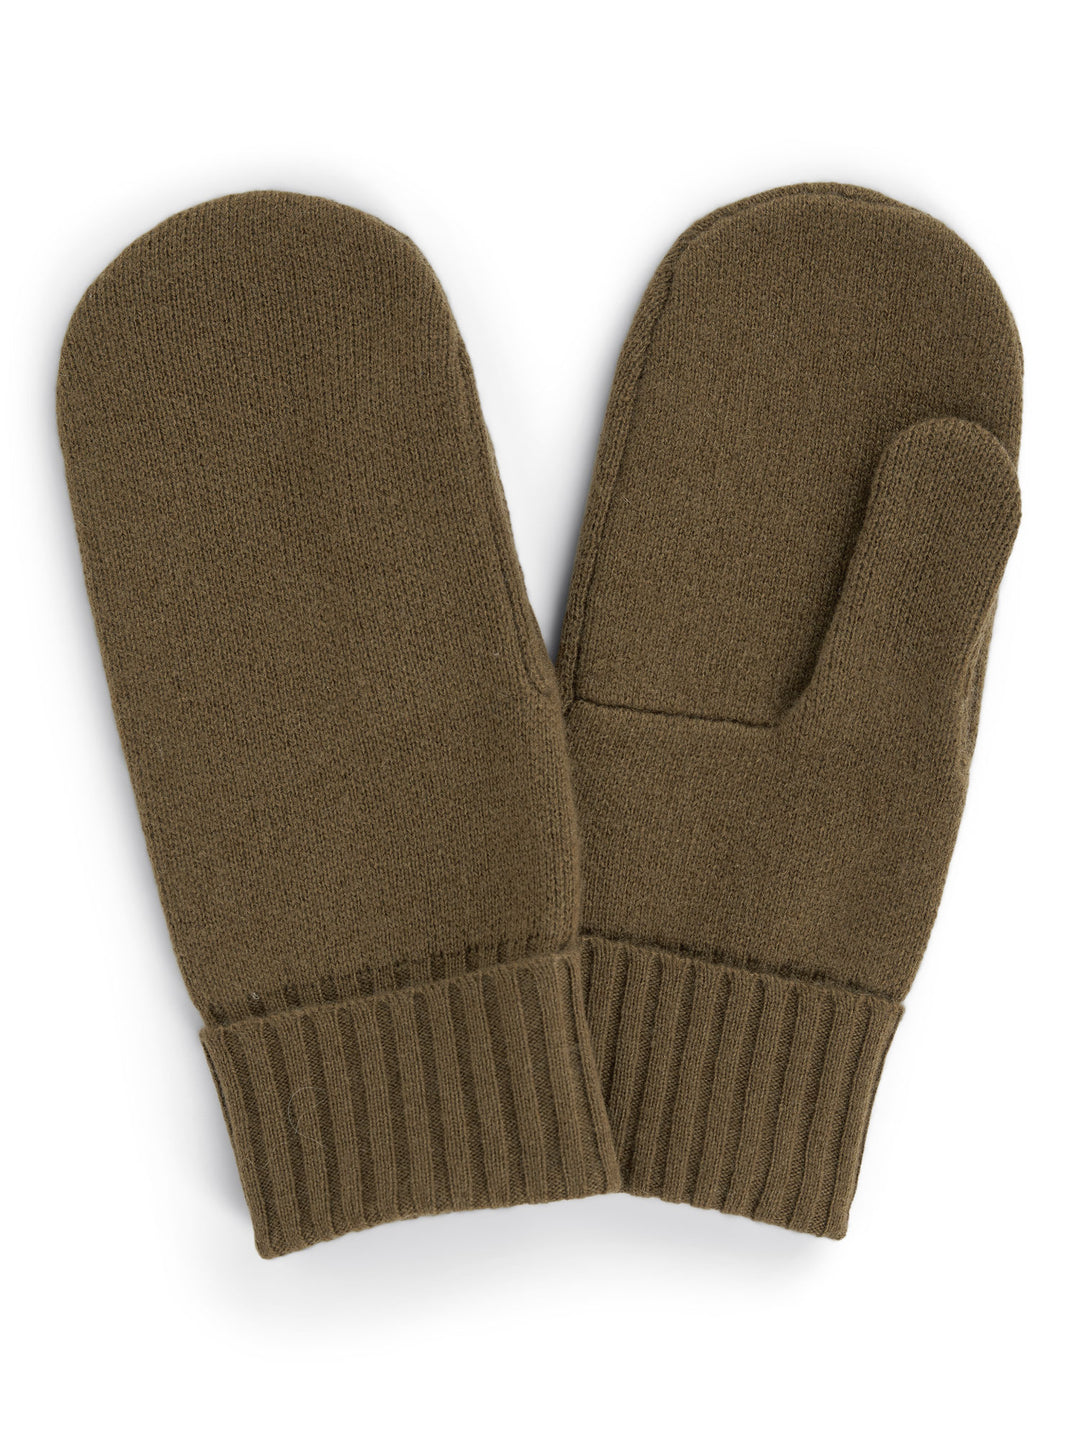 Cashmere mittens "Fryd" in 100% pure cashmere. Scandinavian design by Kashmina. Color: Hunter.